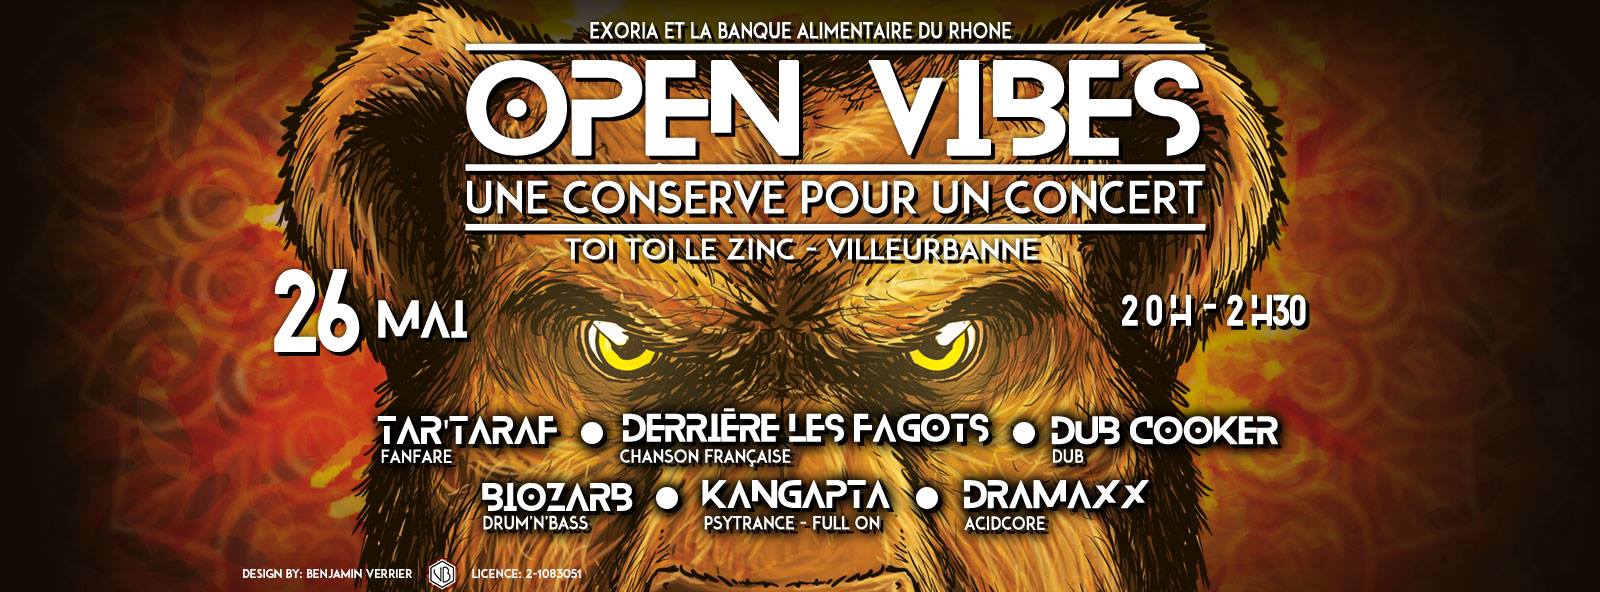 Open-Vibes-Exoria-Lyon